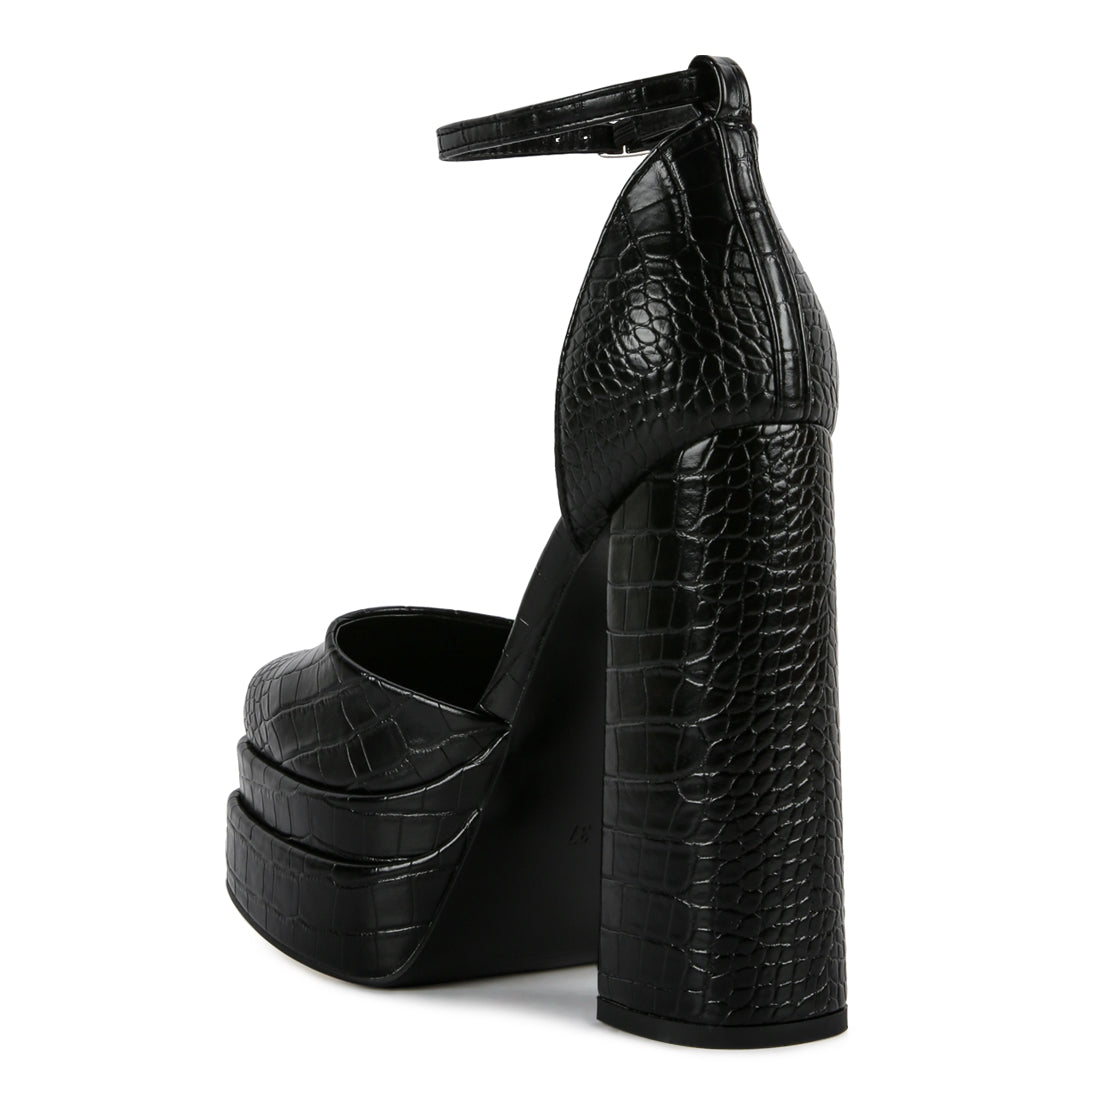 Black Croc Textured High Heeled Block Sandals